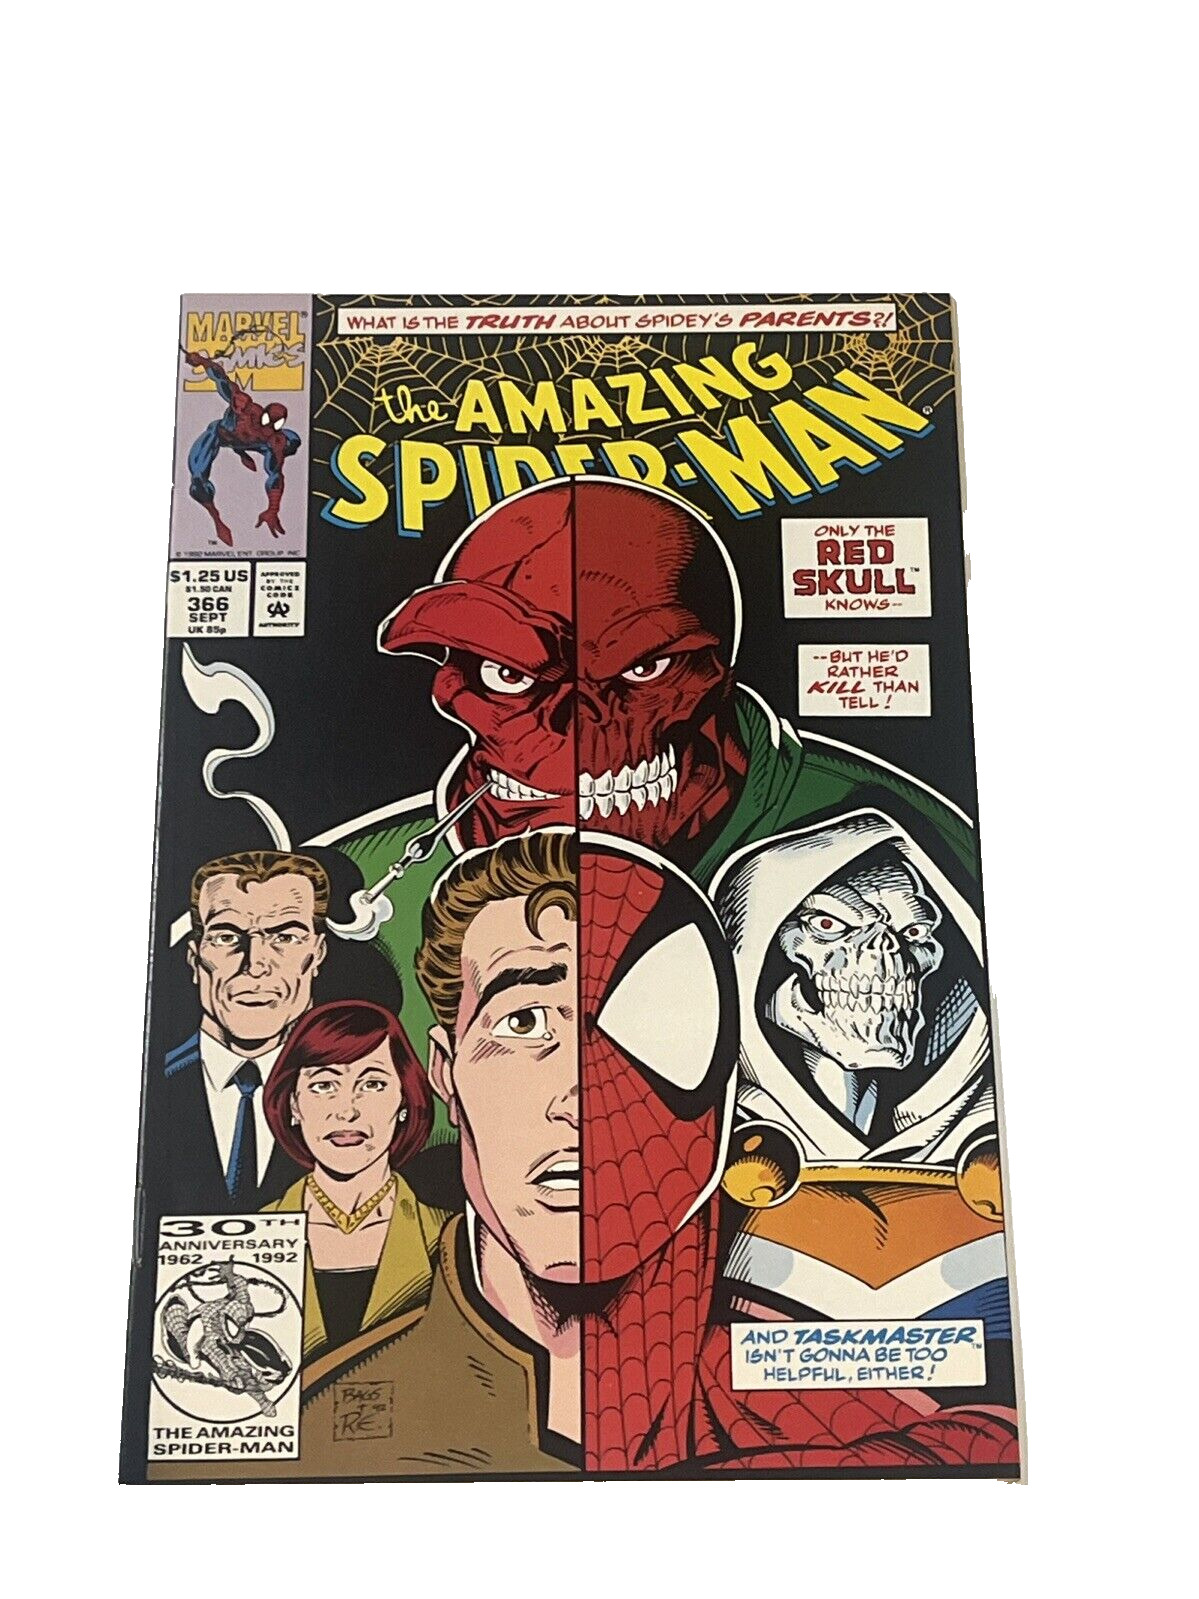 The Amazing Spider-Man #366 (Marvel Comics August 1992)